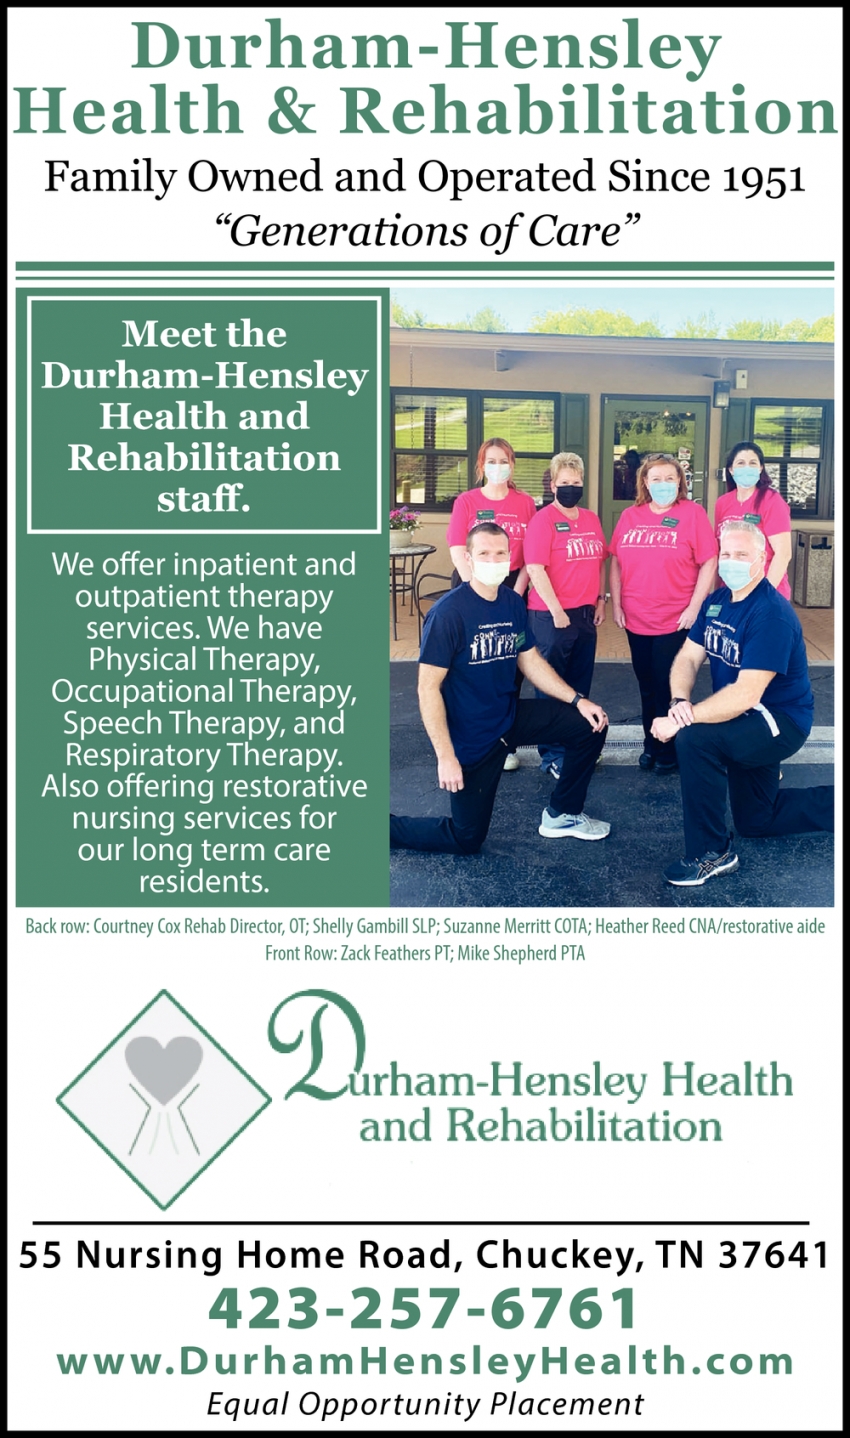 Health and Rehabilitation Services